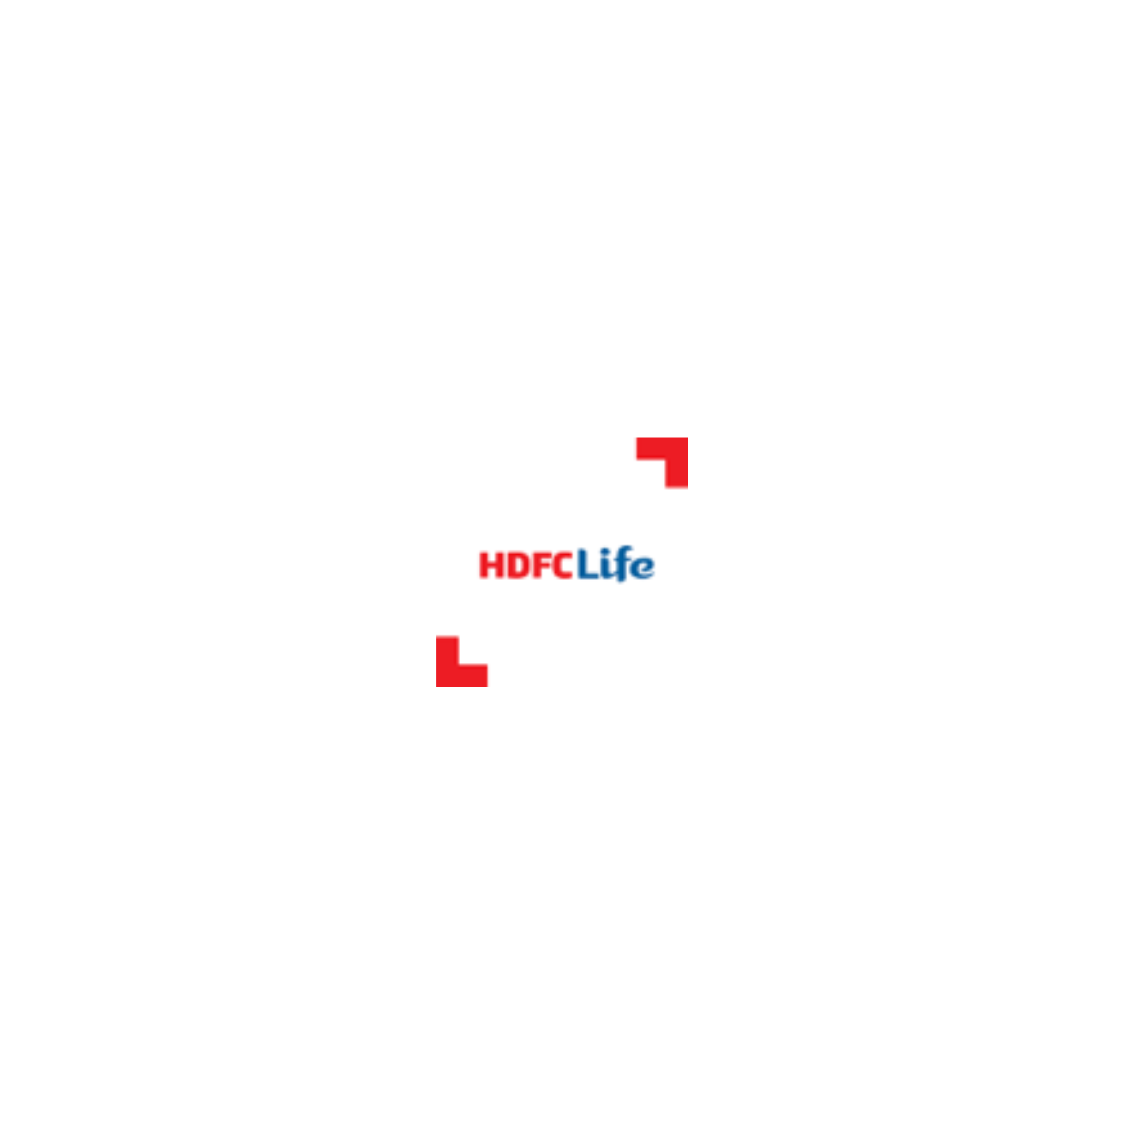 HDFC life logo